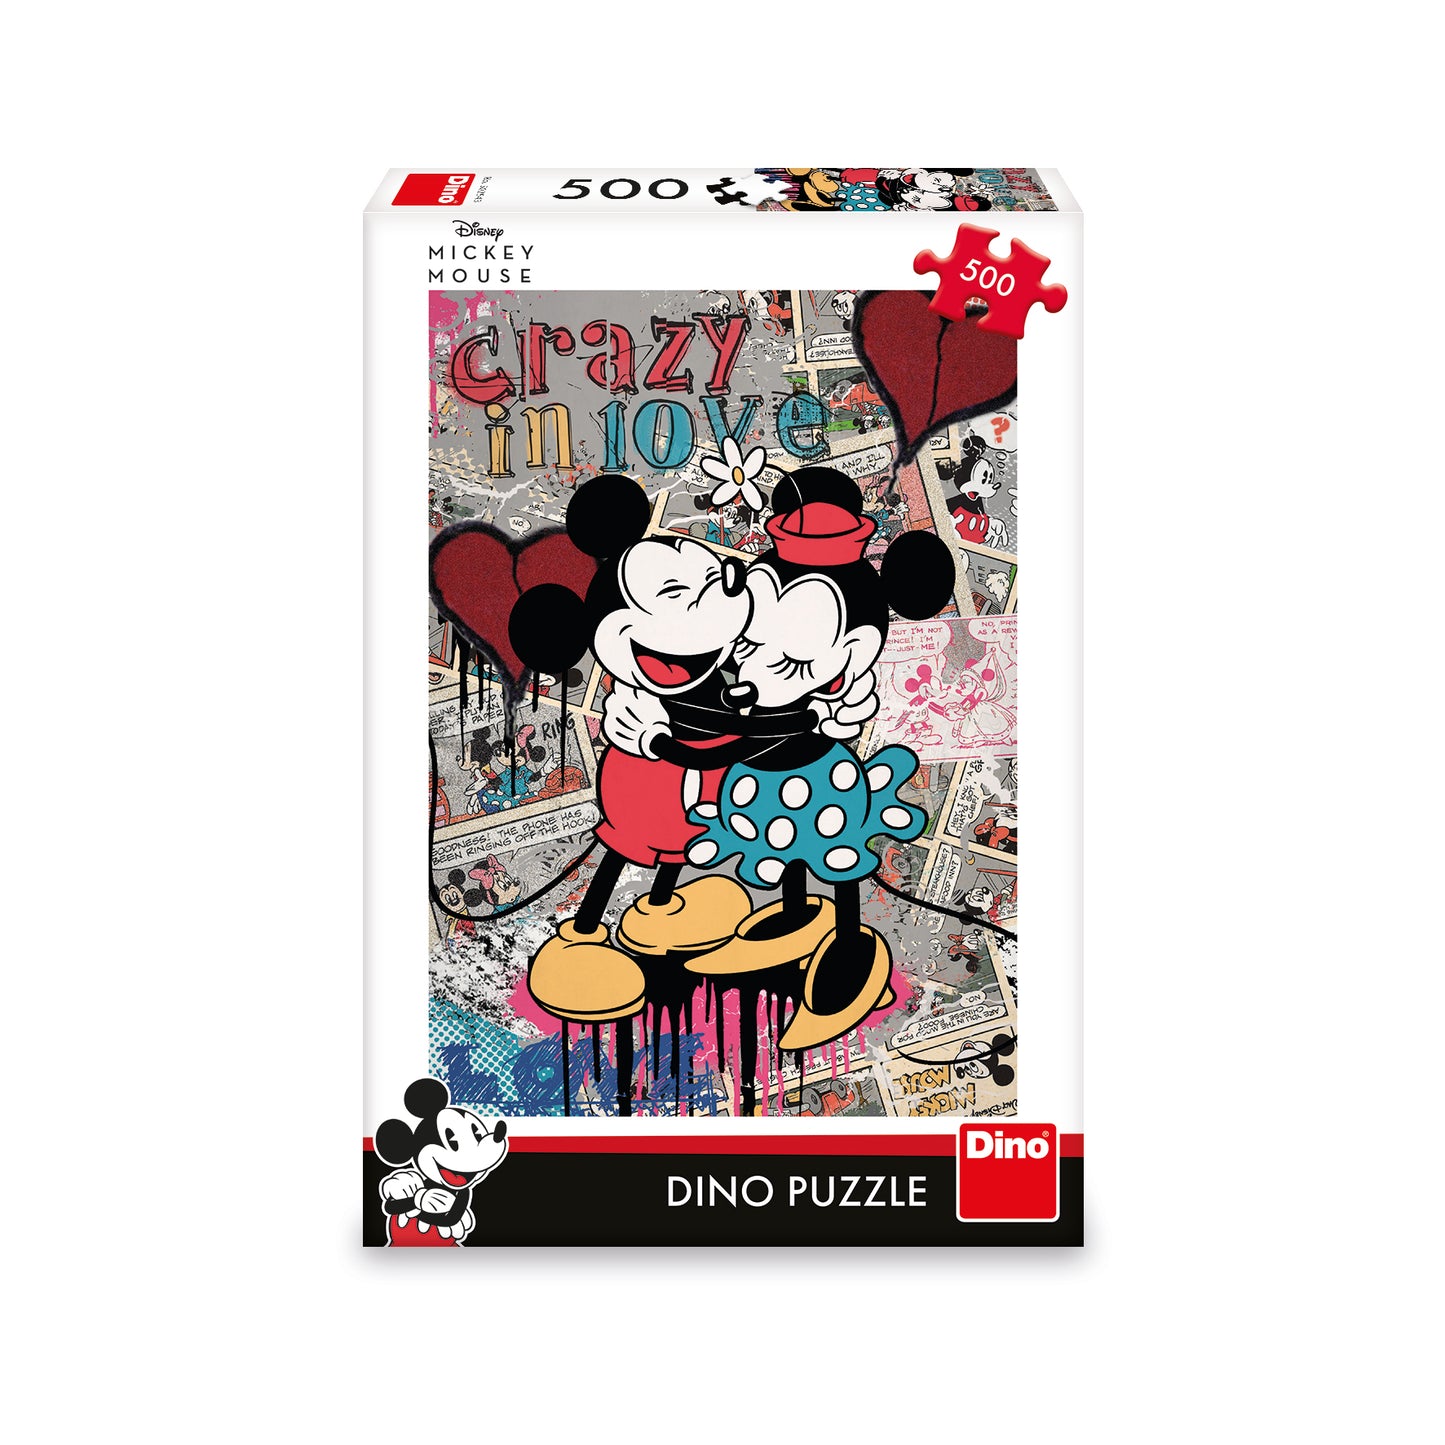 Retro Mickey Mouse by Disney, 500 Piece Puzzle